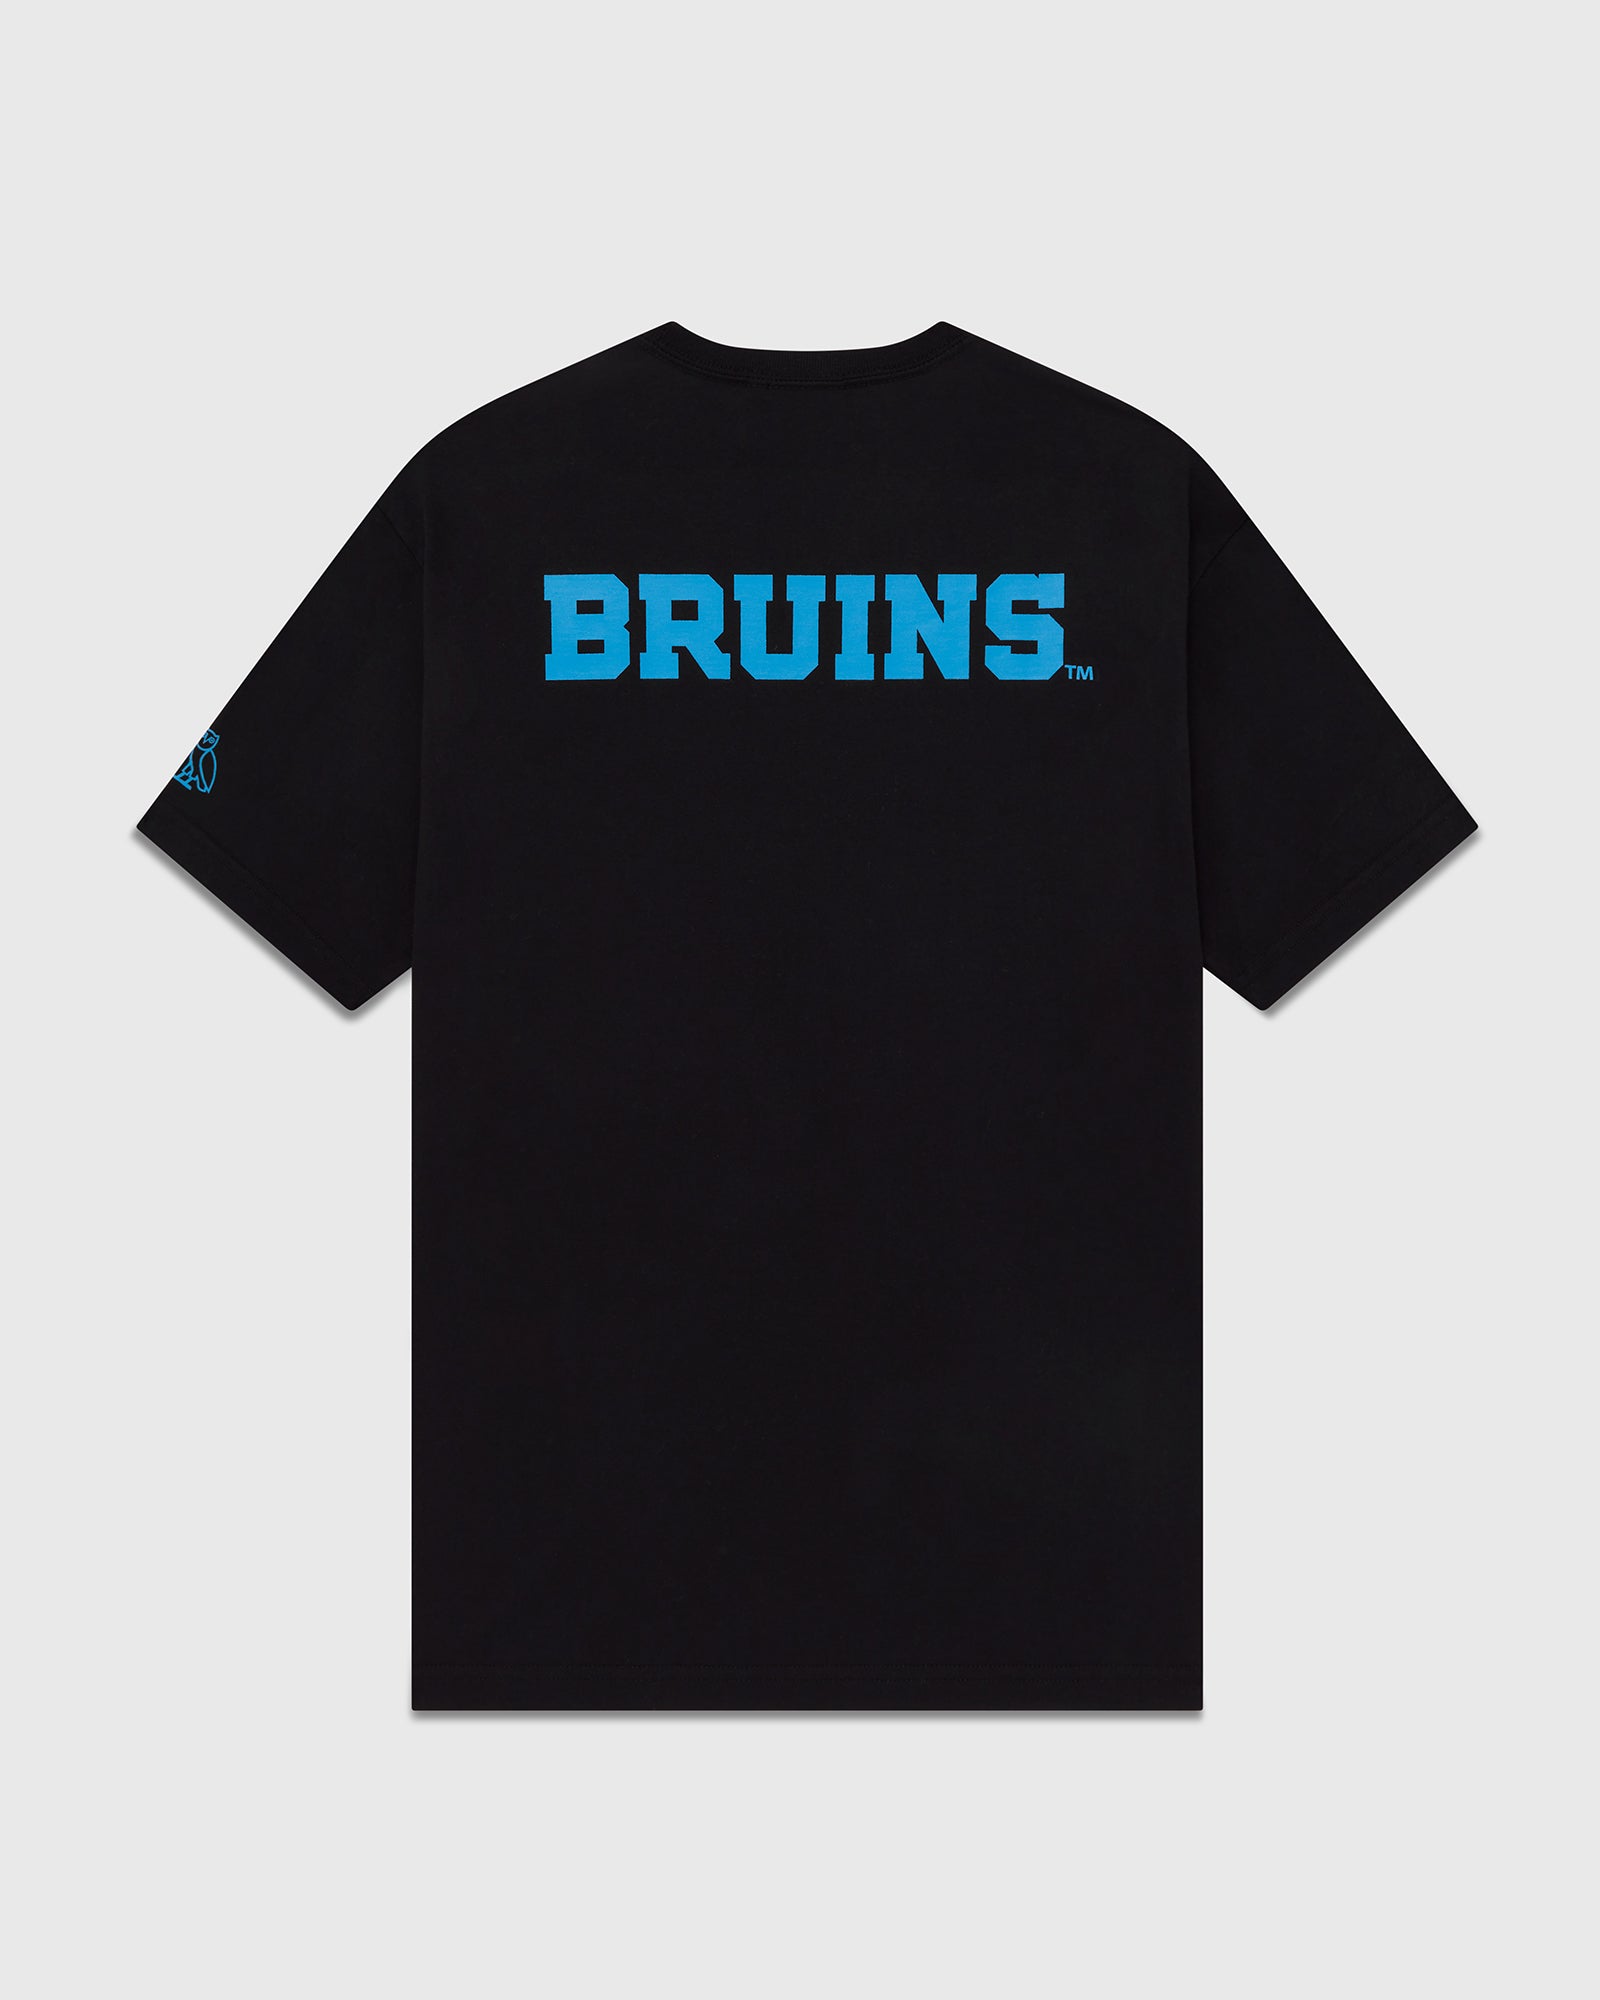 UCLA Bruins T-Shirt - Black